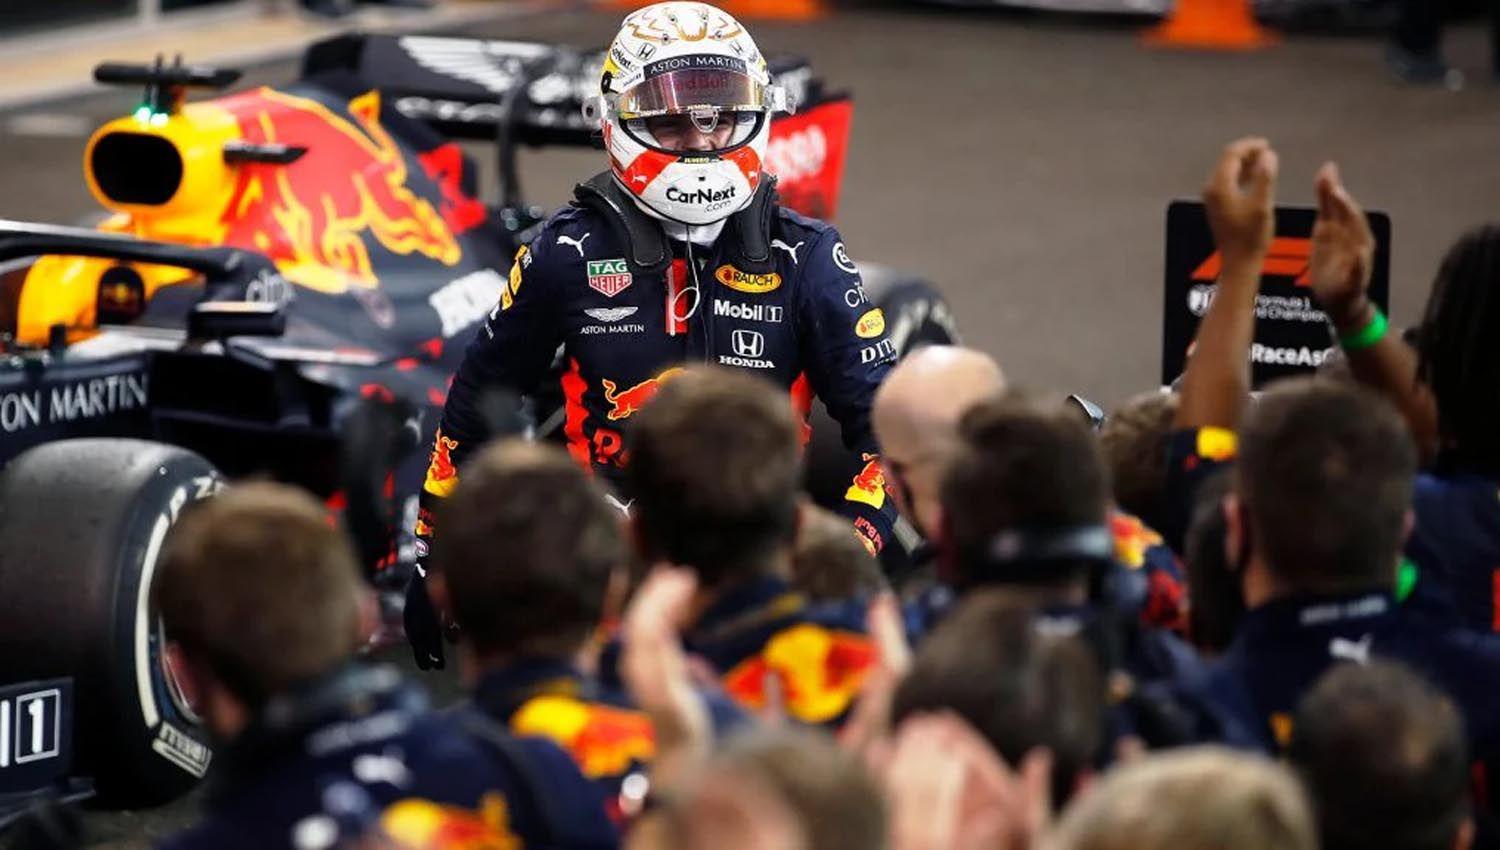 Foacutermula 1- Verstappen ganoacute la uacuteltima carrera del antildeo